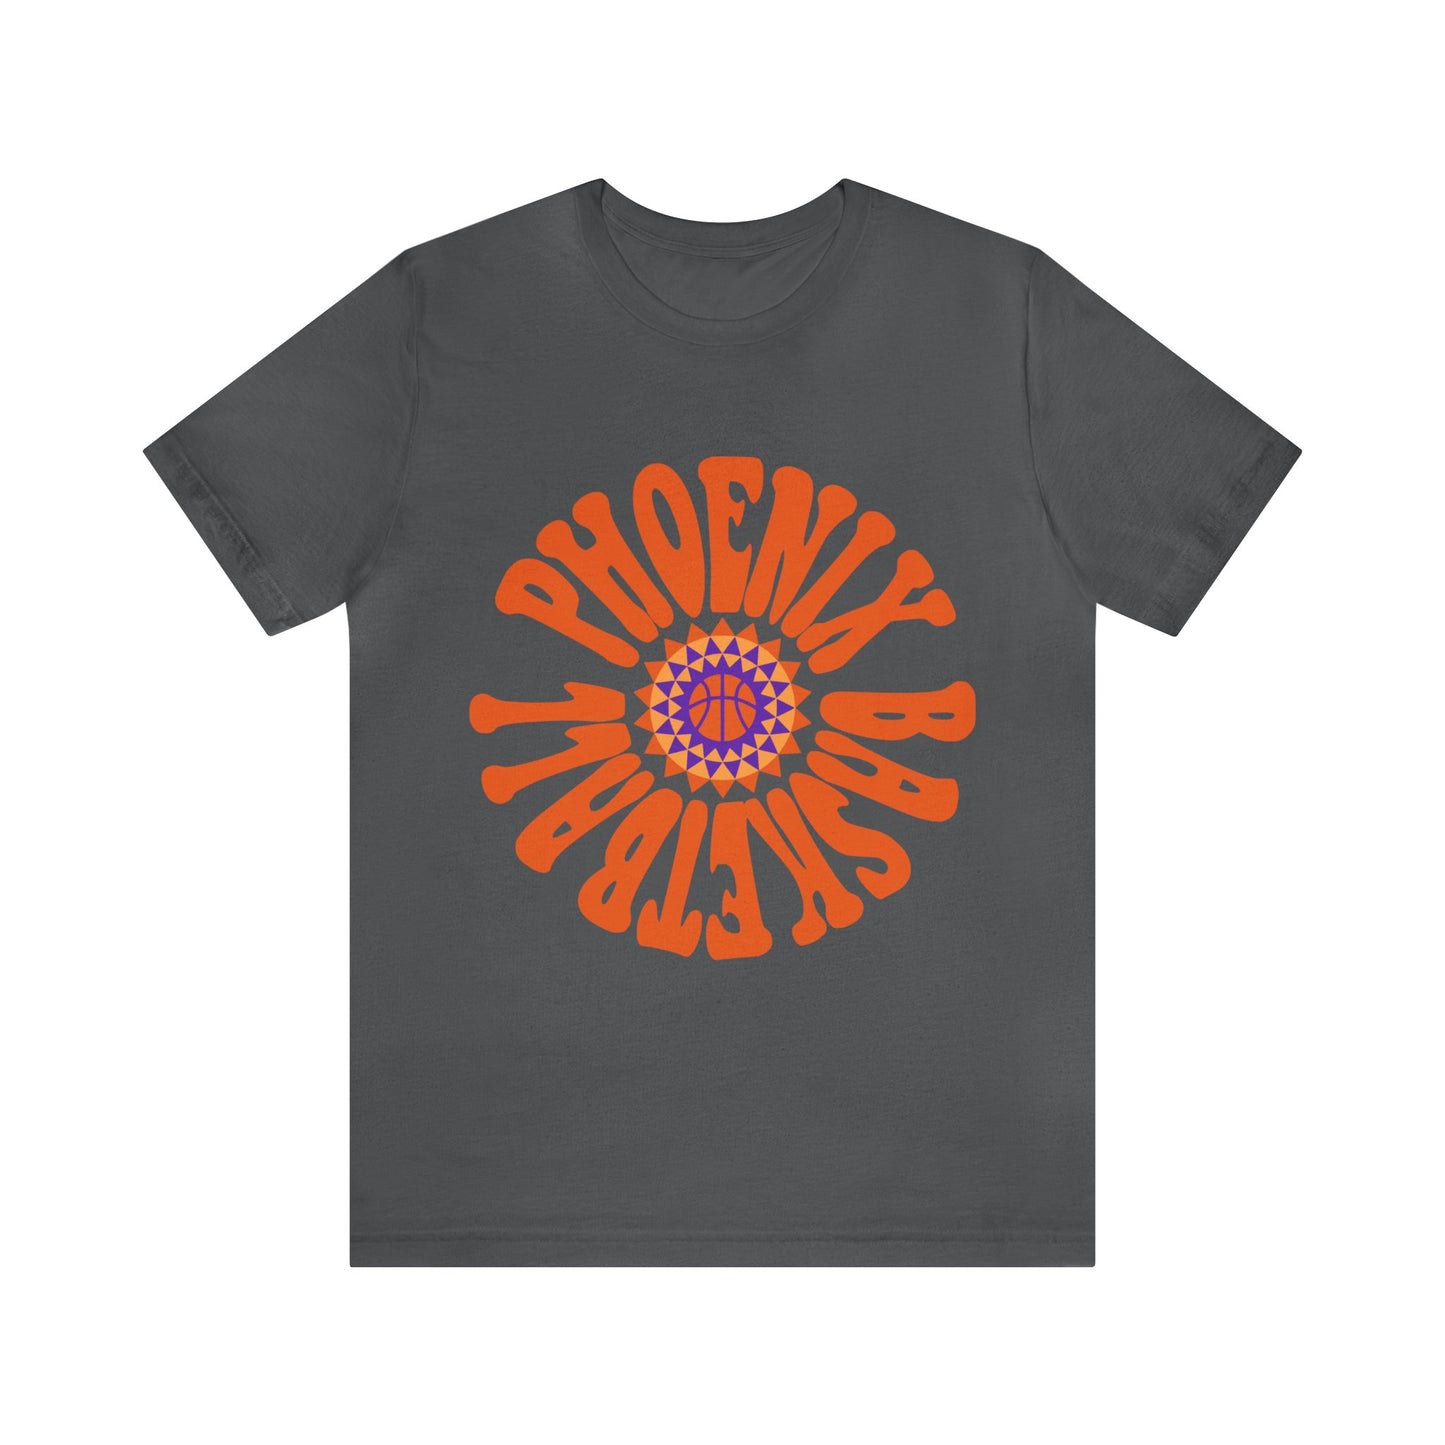 Vintage Phoenix Suns T-Shirt - NBA Basketball - Retro Style Short Sleeve Tee - Men's & Women's Oversized Apparel